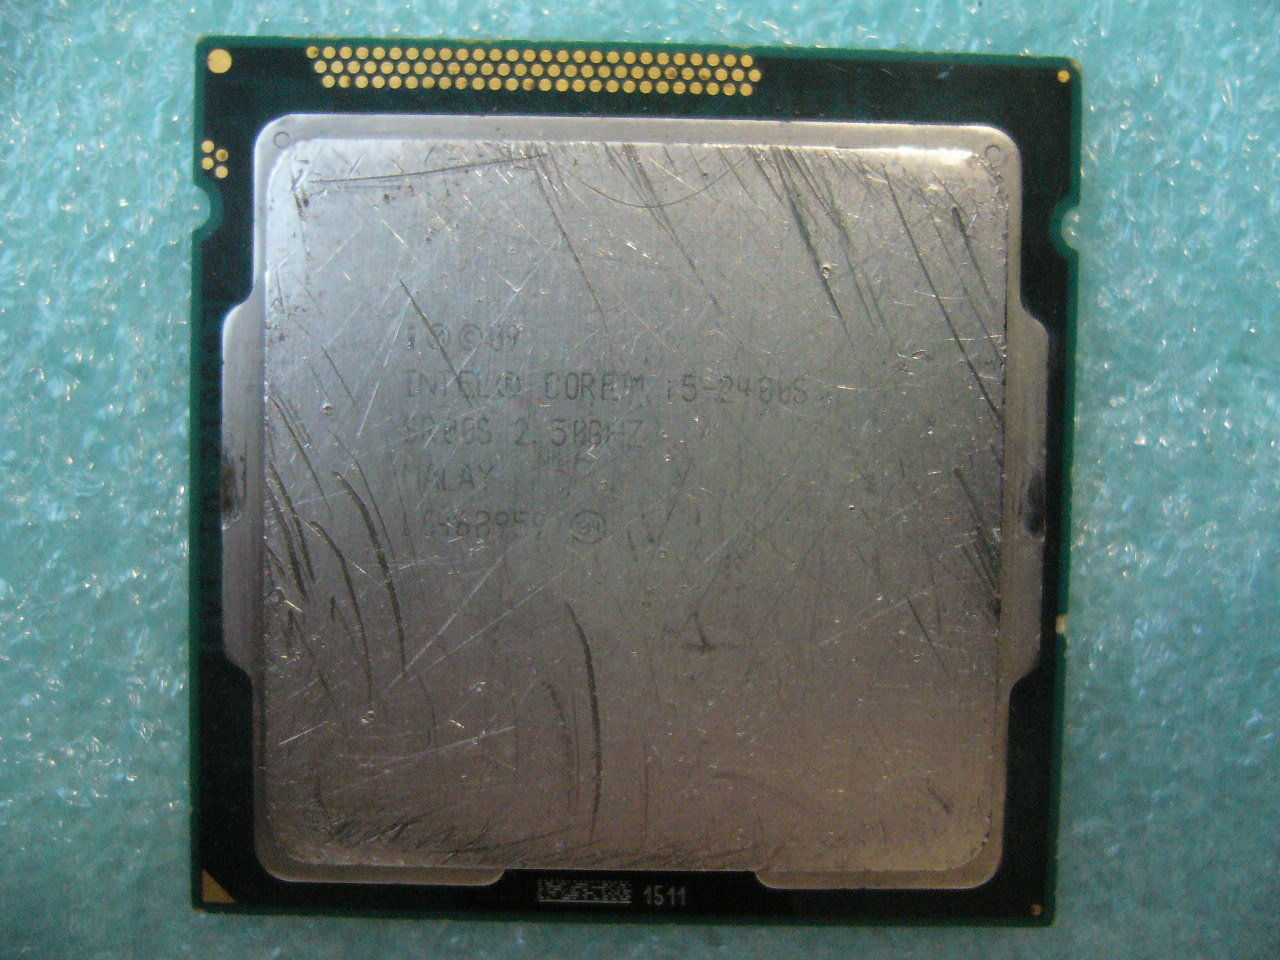 QTY 1x Intel CPU i5-2400S Quad-Cores 2.50Ghz LGA1155 SR00S NOT WORKING